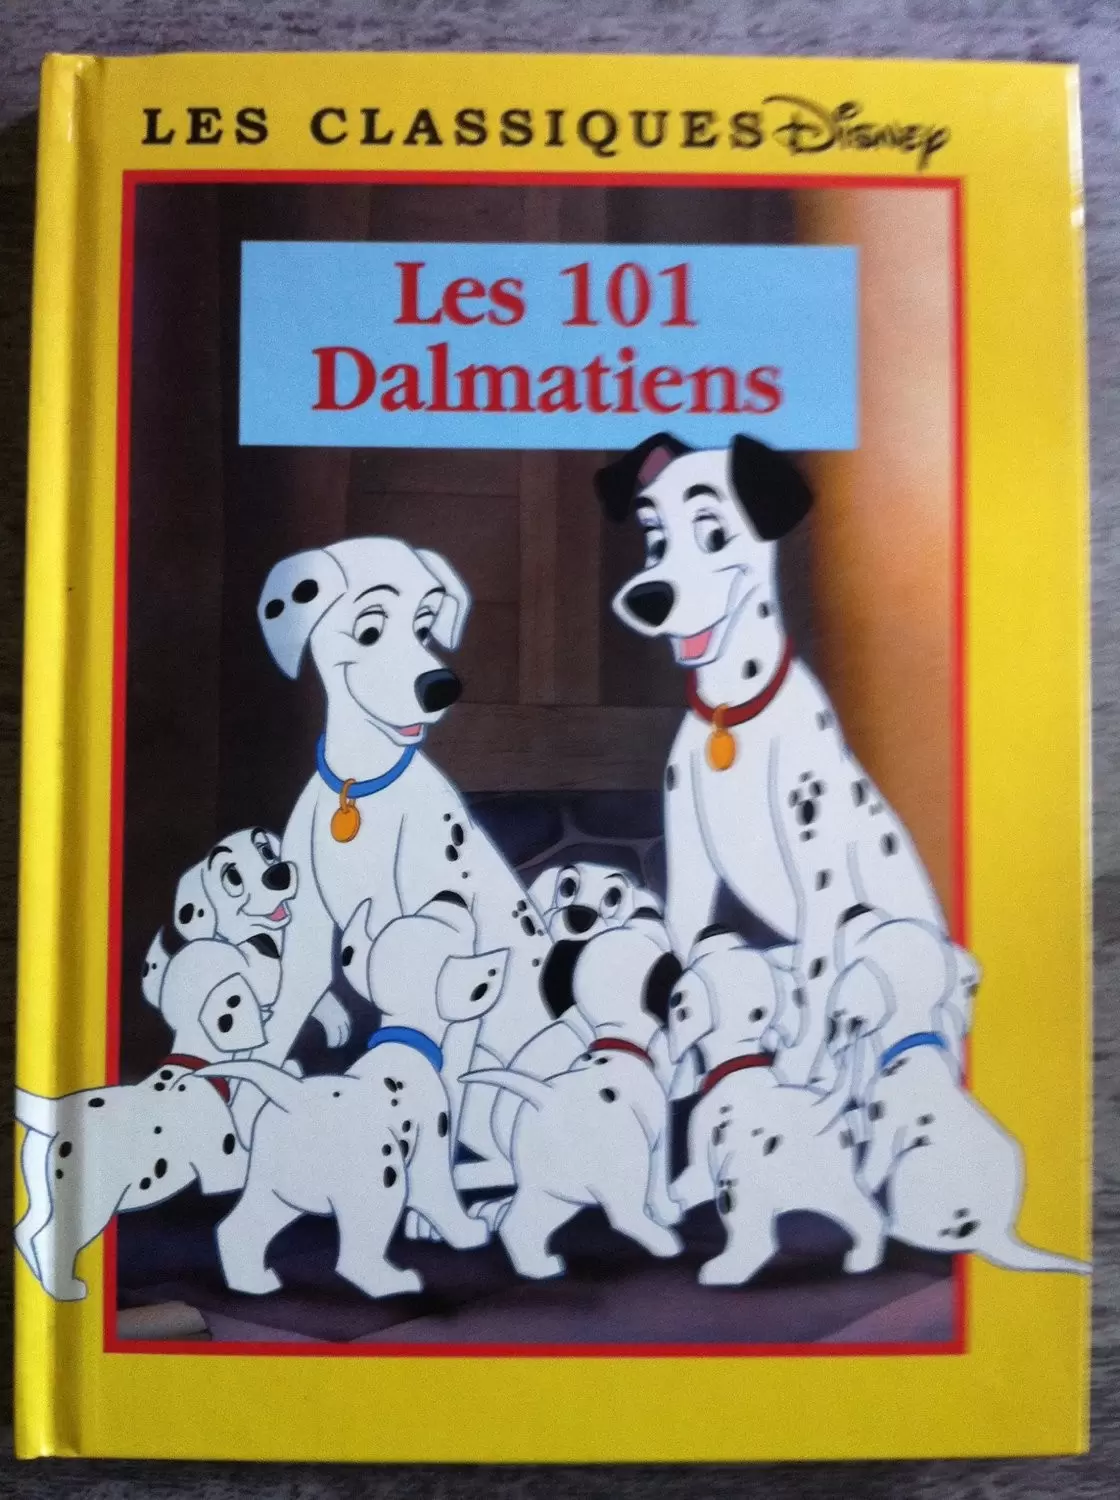 Les Classiques Disney - Edition France Loisirs - Les 101 Dalmatiens